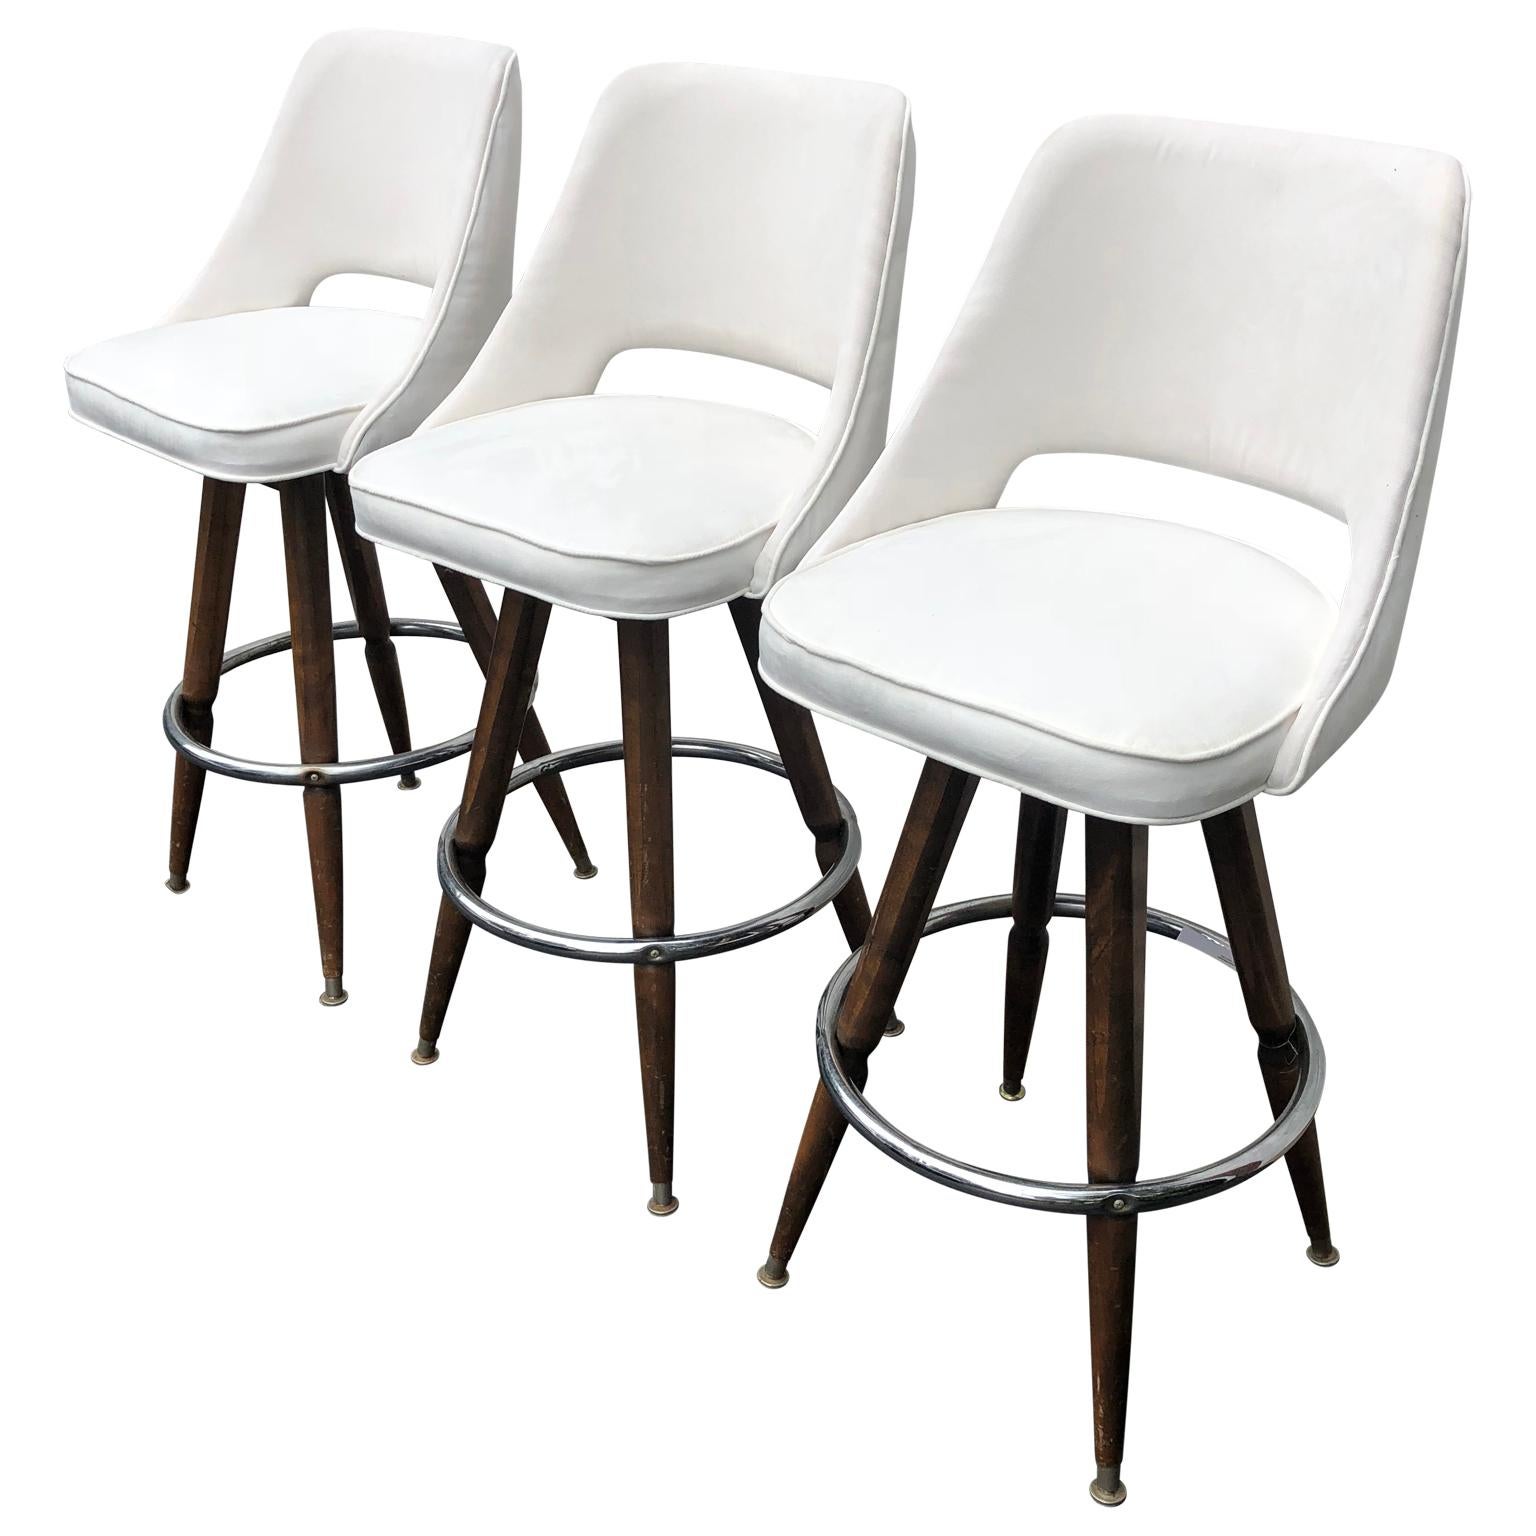 set of three bar stools